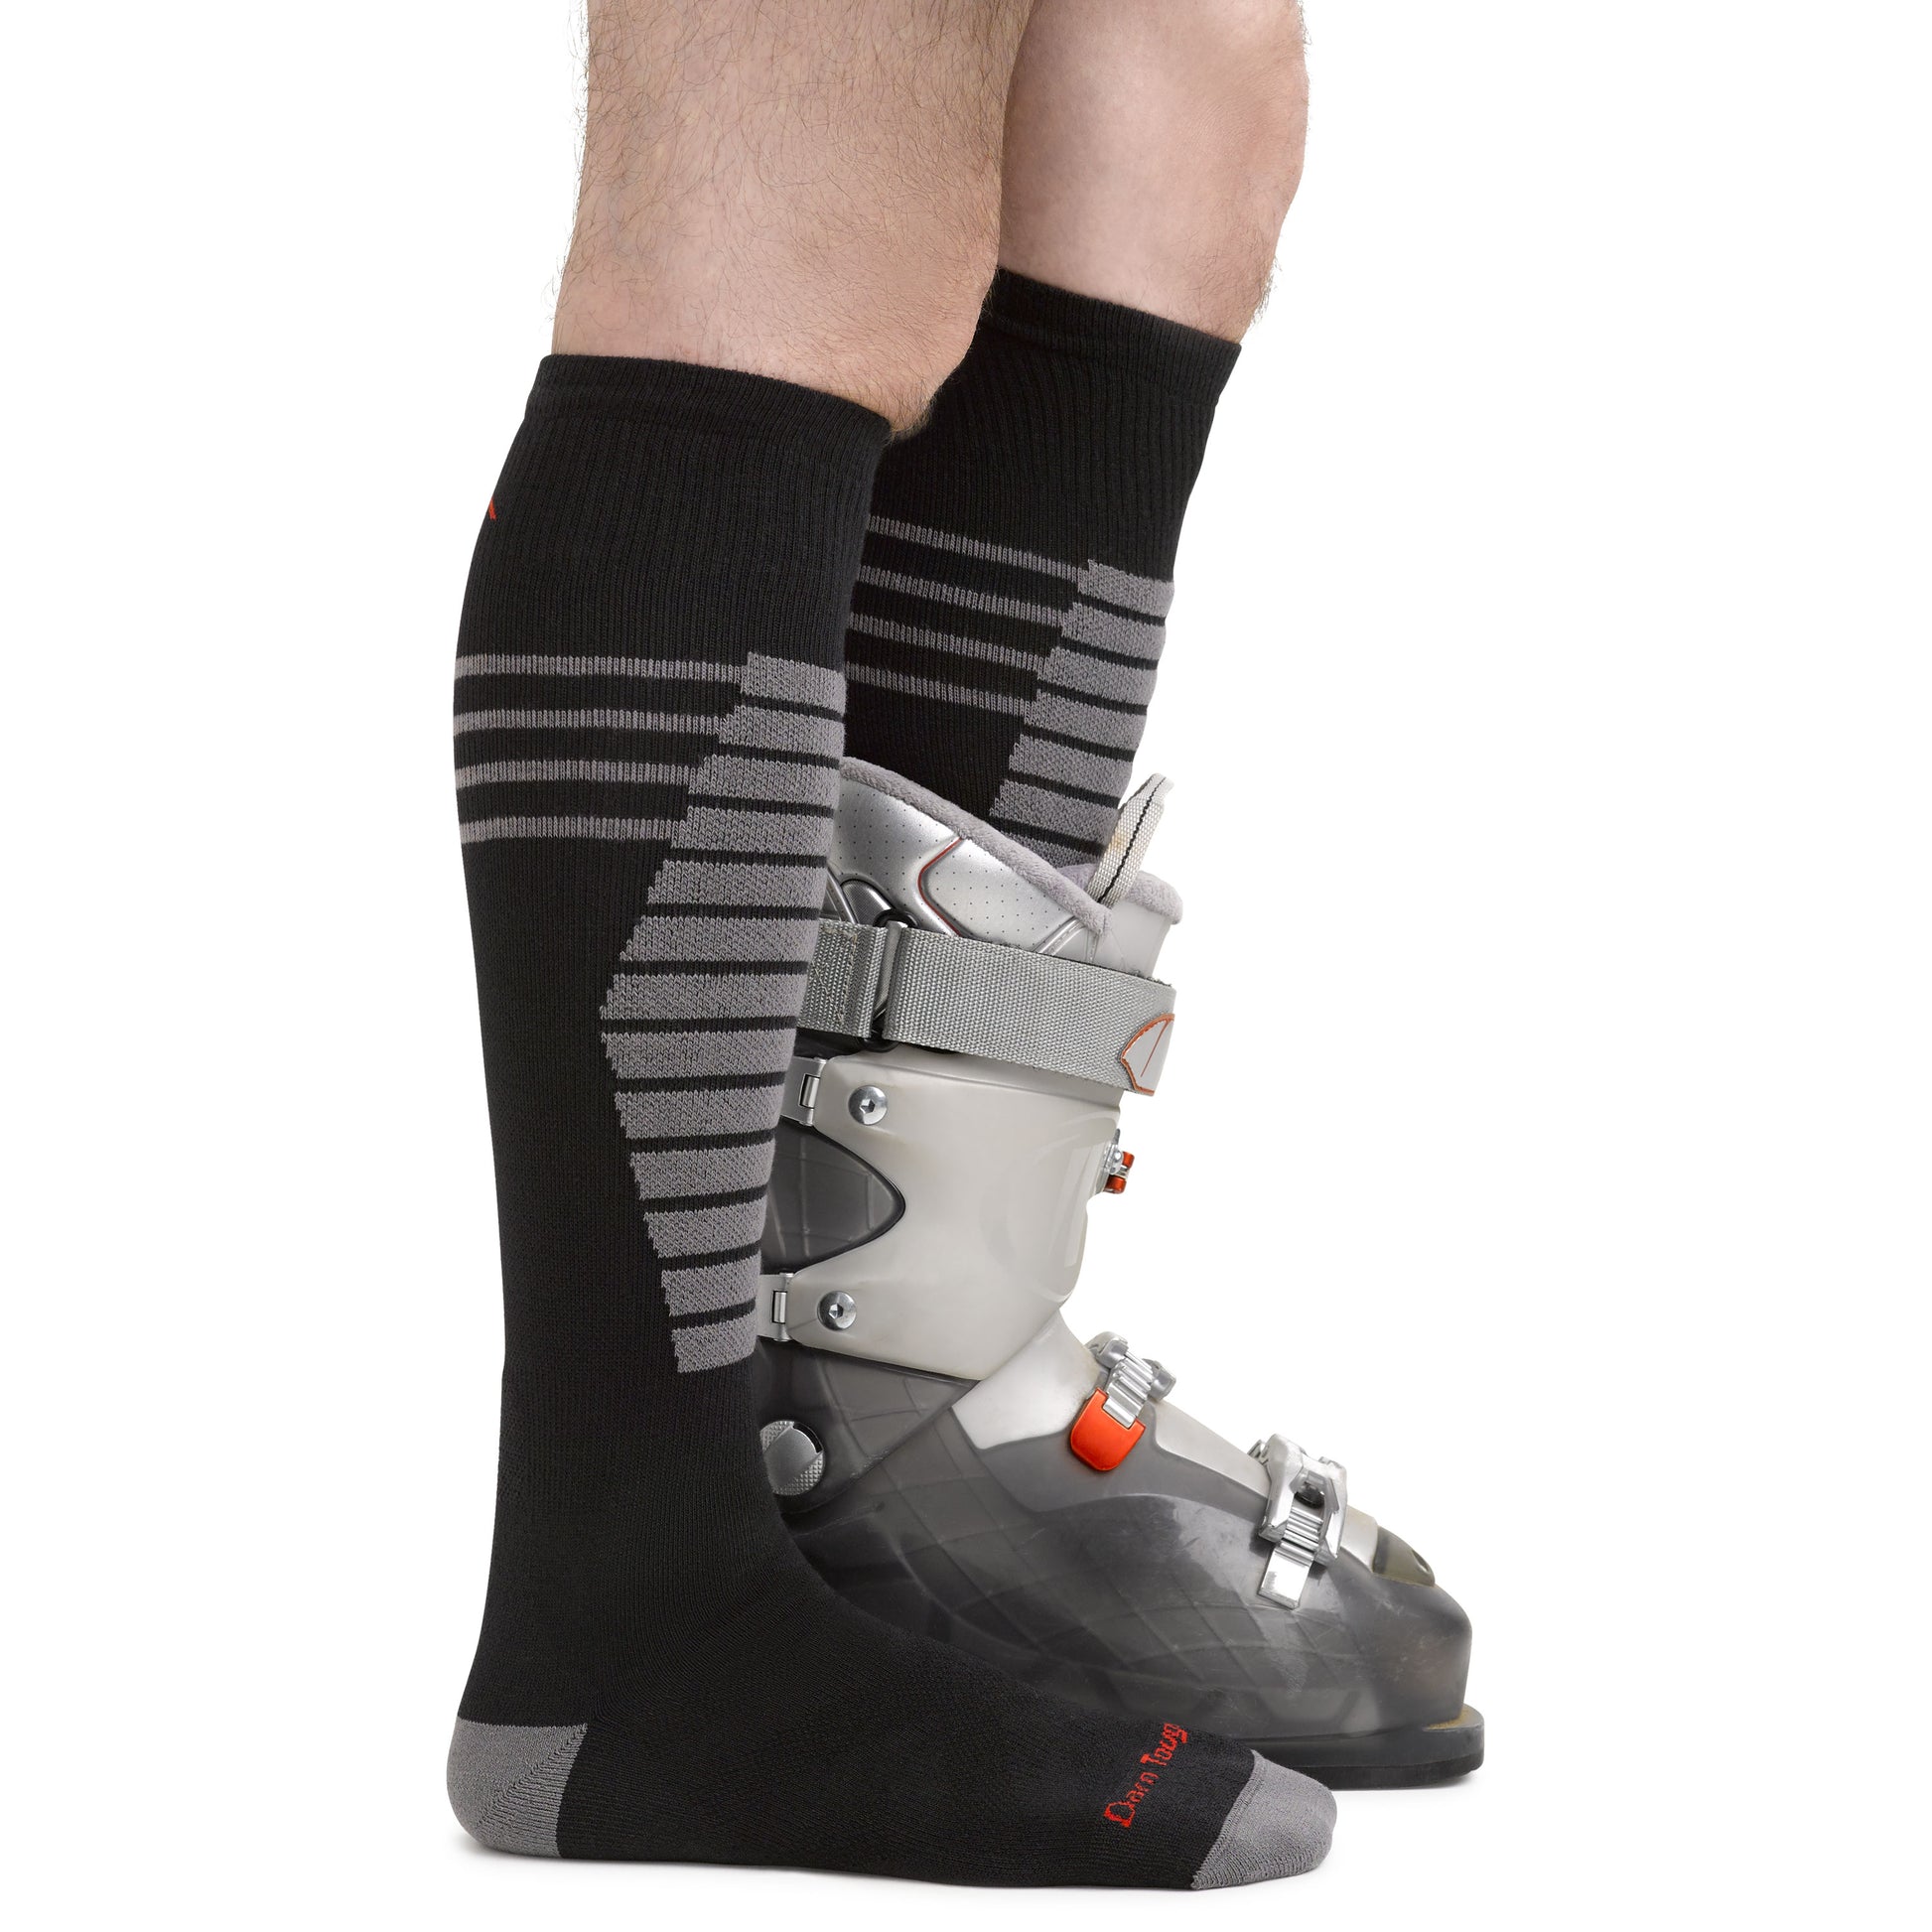 Darn Tough Men's Black Thermolite Edge Over-the-Calf Midweight Ski & Snowboard Sock on model in ski boot